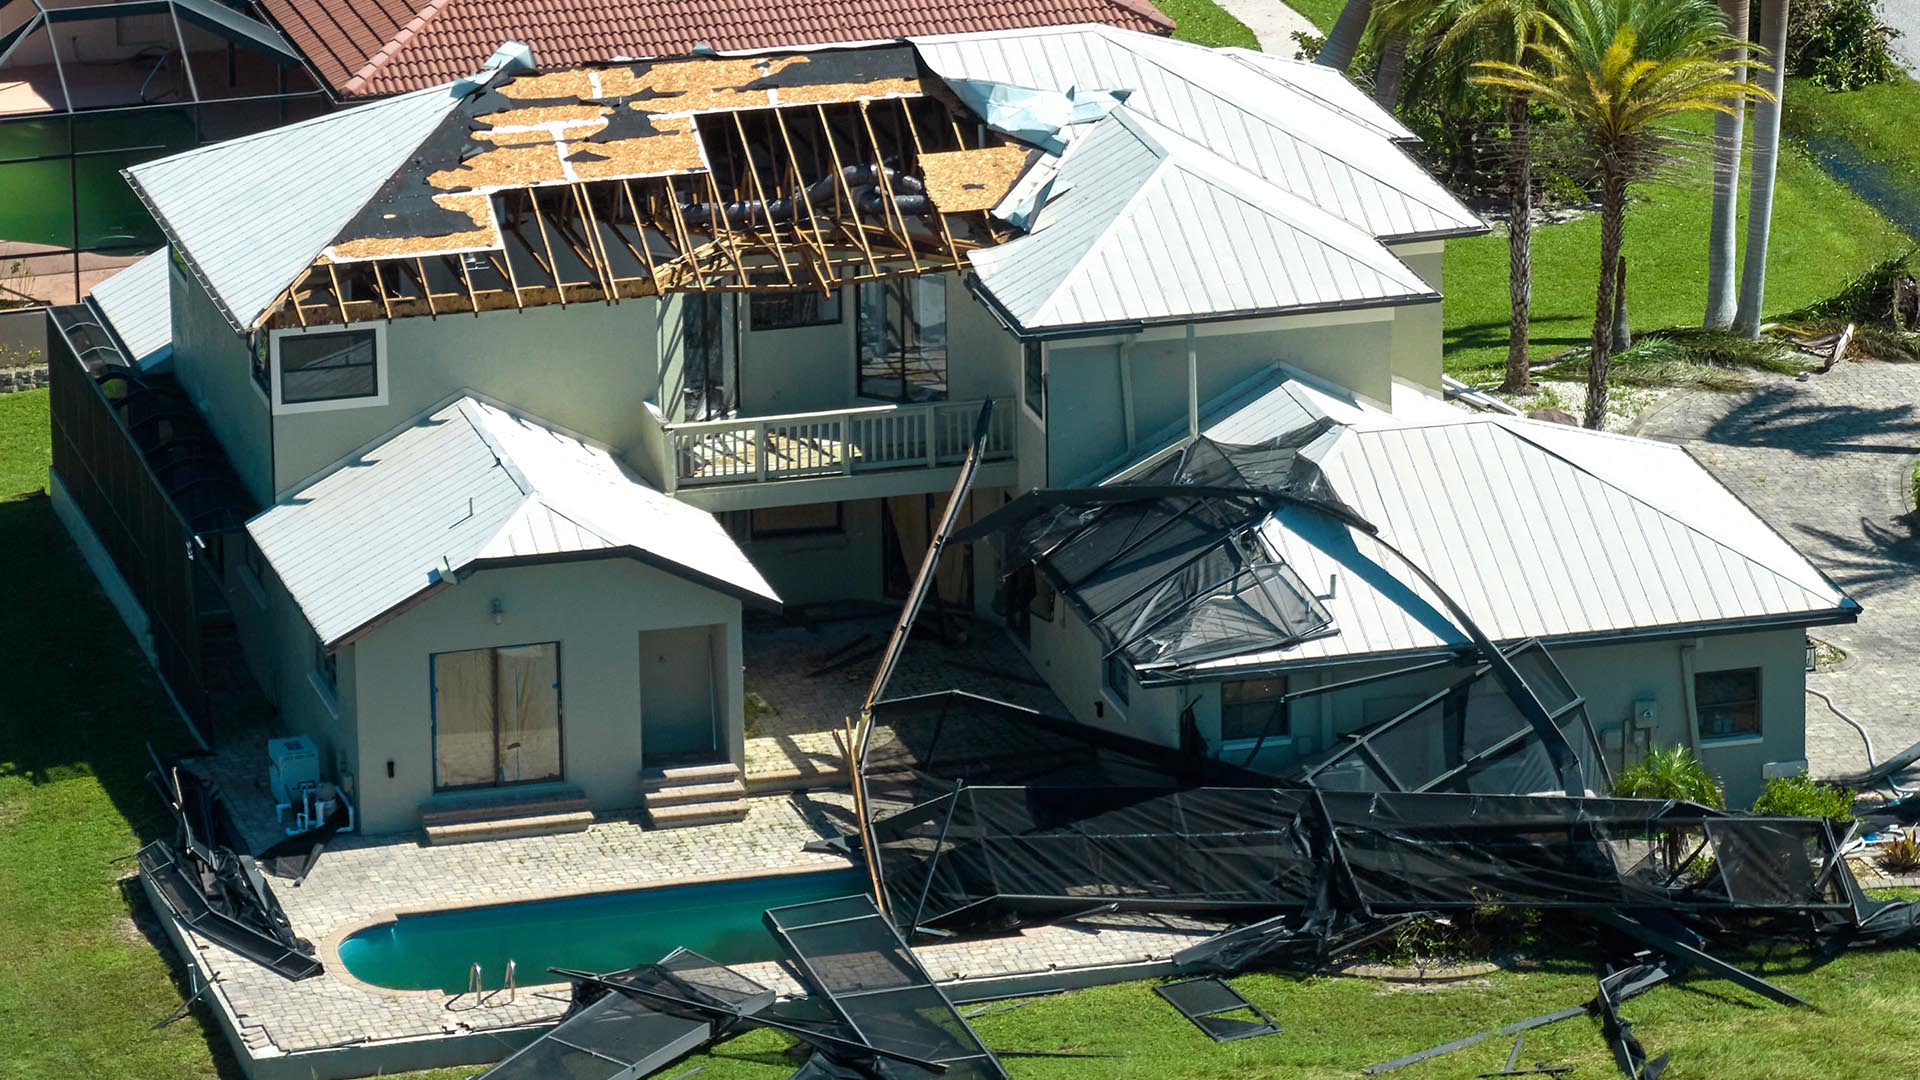 Tornado property damage claim lawyers in Florida